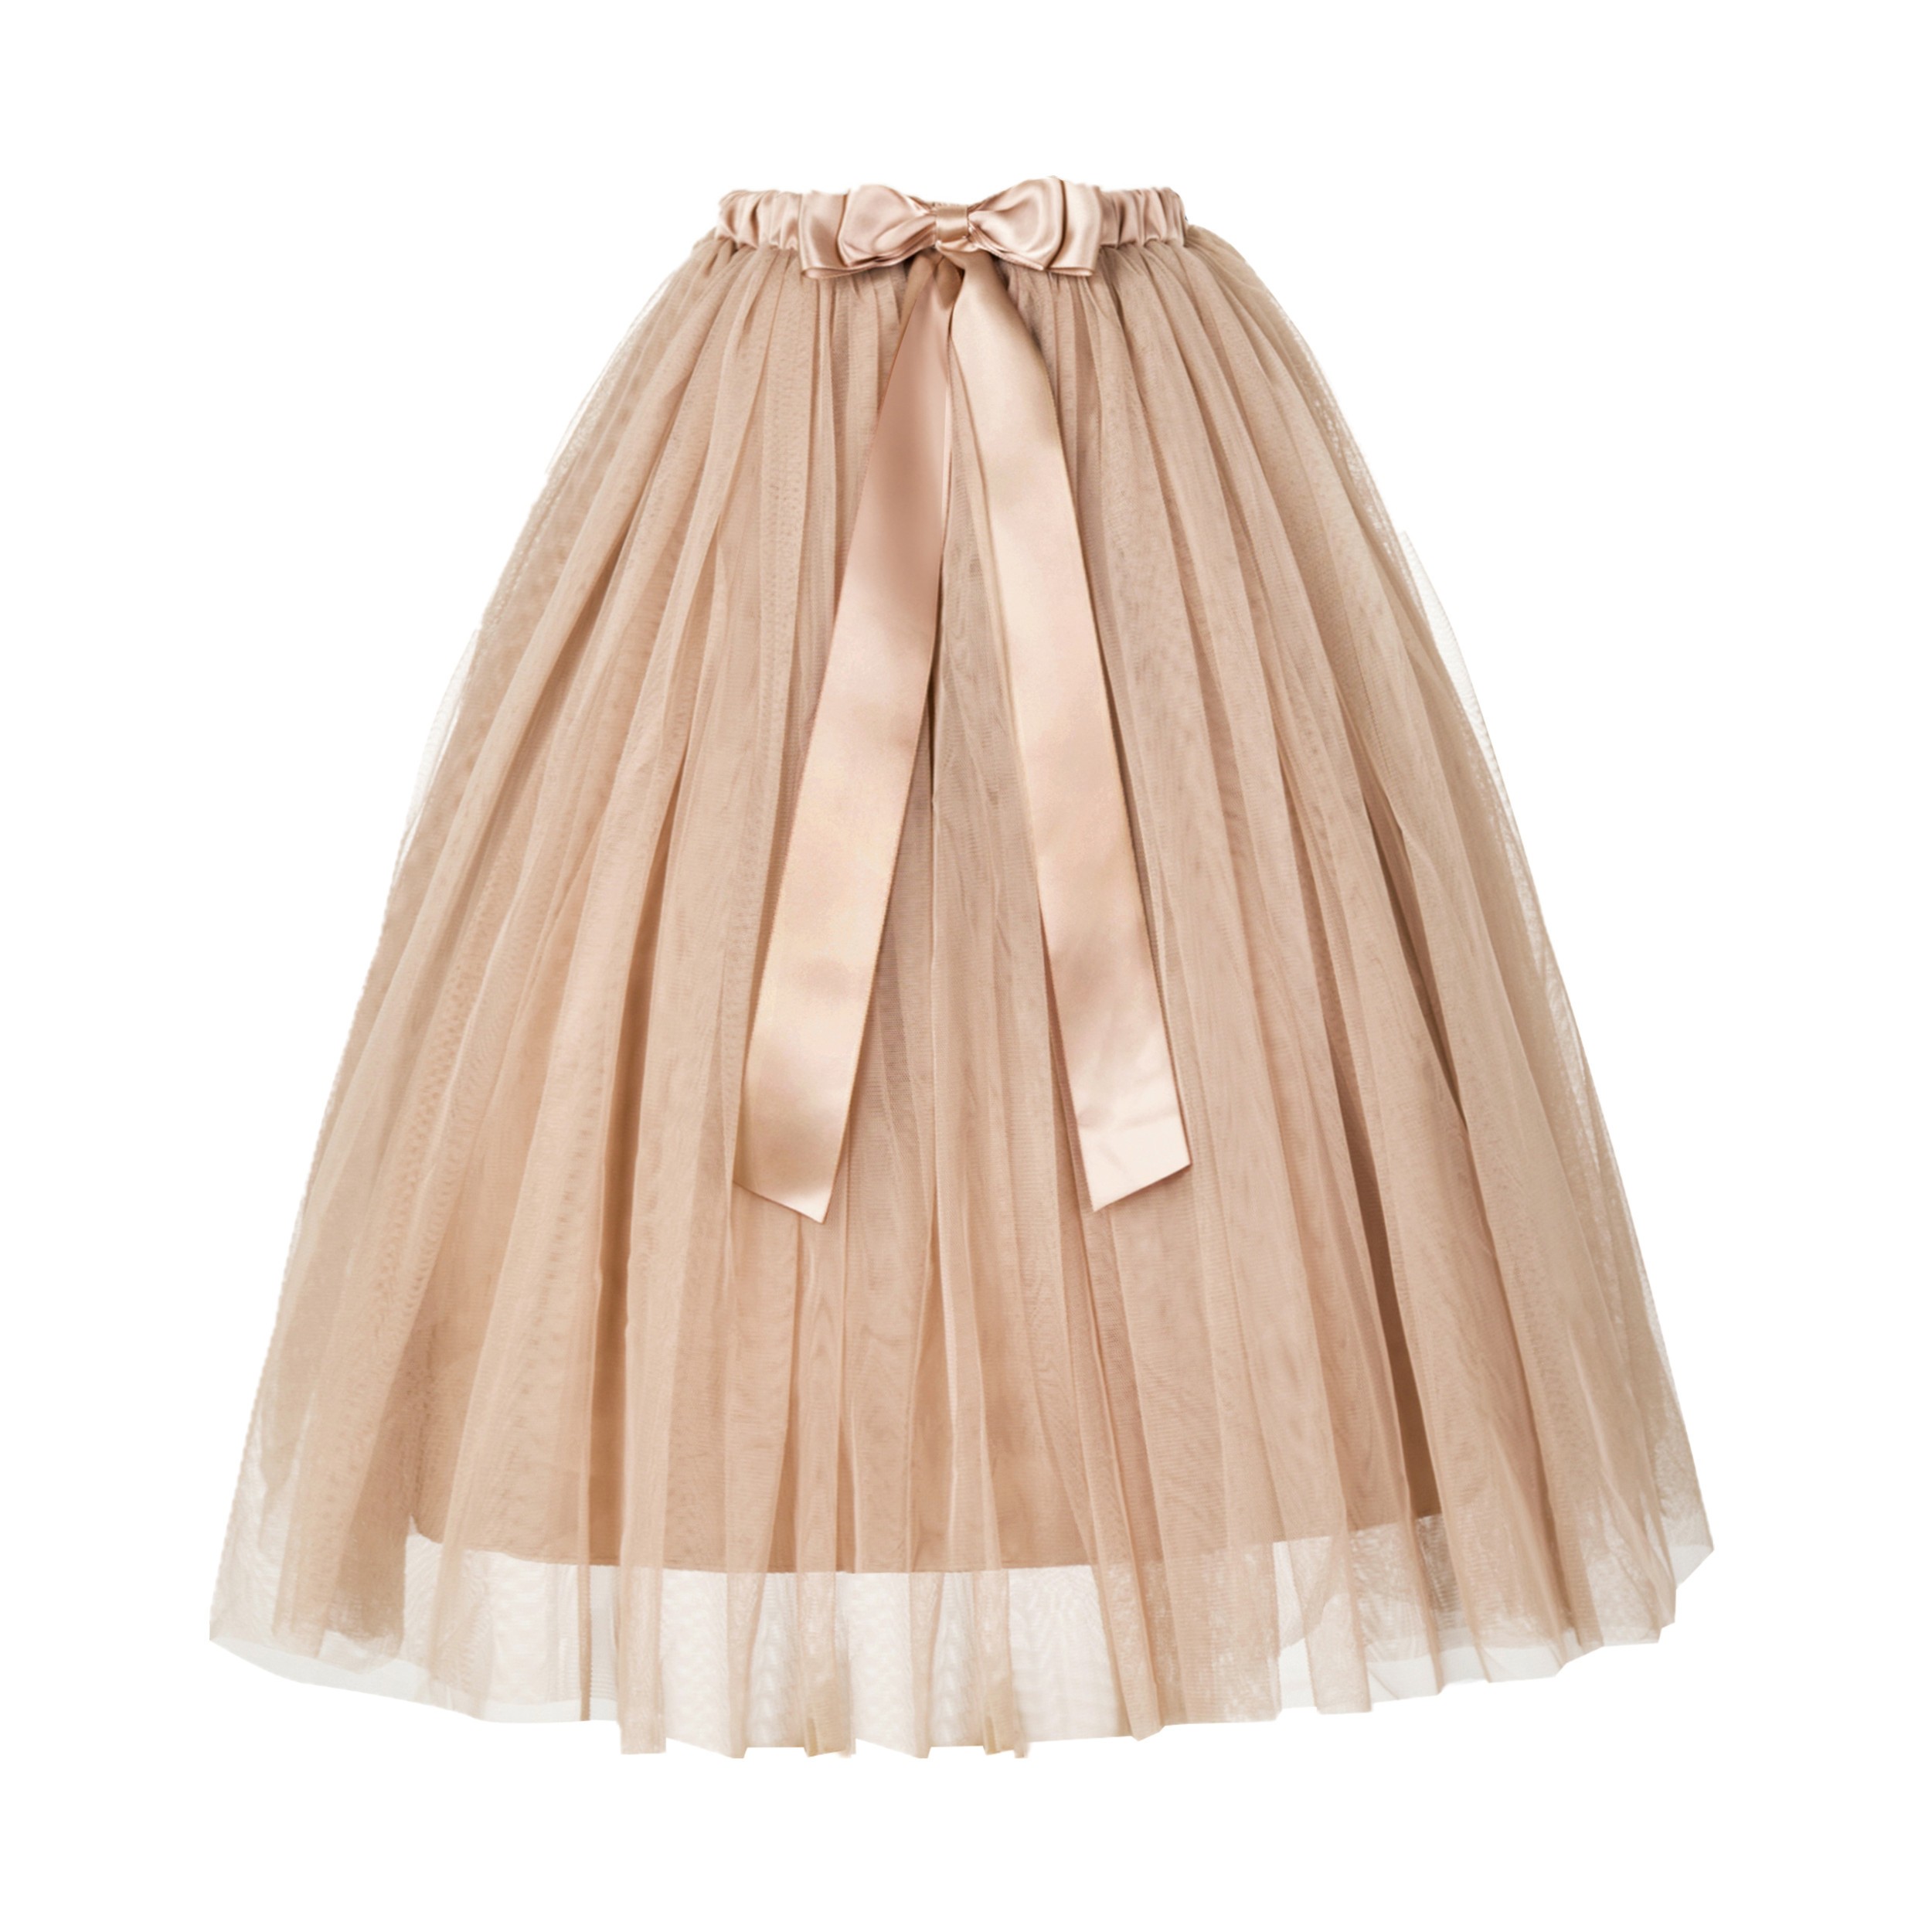 Tulle Tutu Layered Skirt with Ribbon Bow & Elastic Waistband